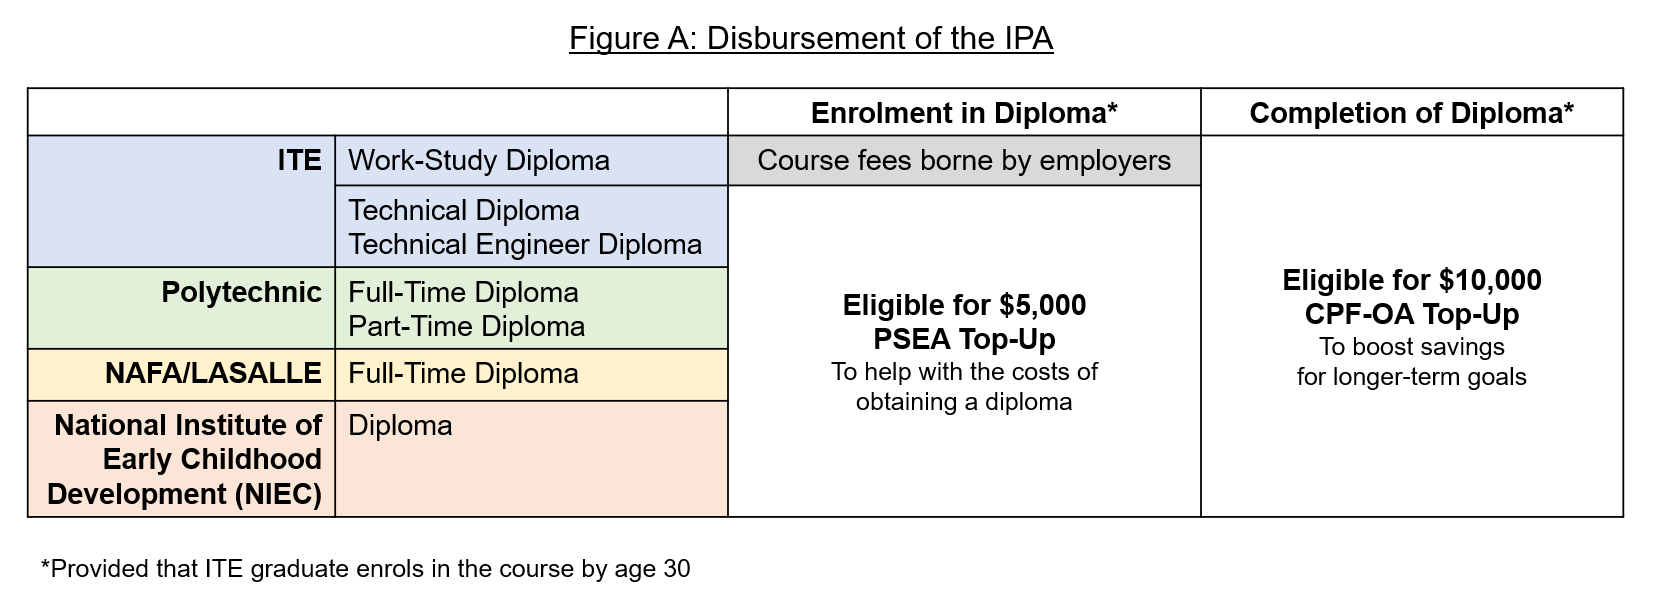 Disbursement of the IPA